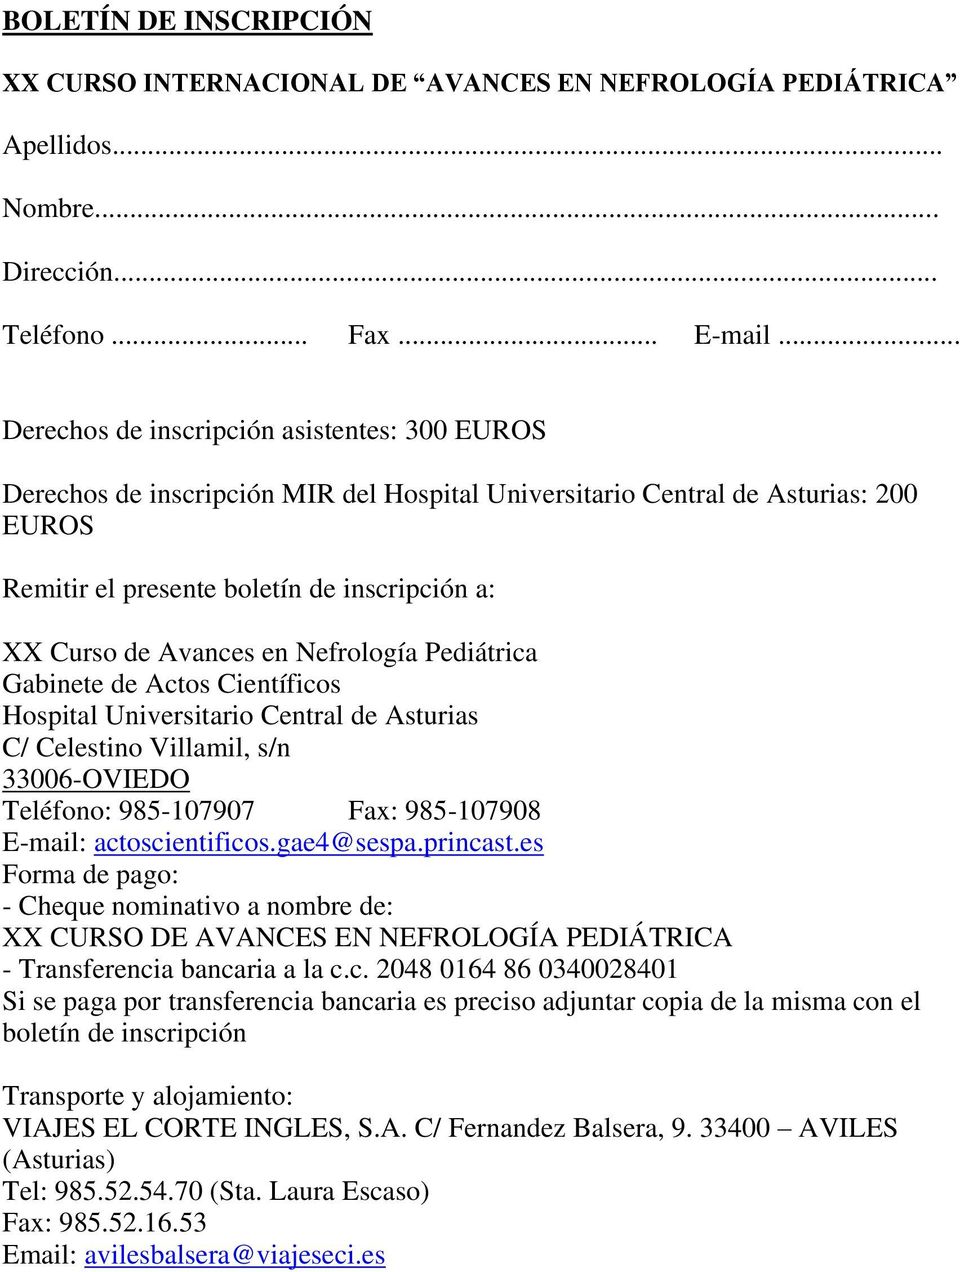 Avances en Nefrología Pediátrica Gabinete de Actos Científicos Hospital Universitario Central de Asturias C/ Celestino Villamil, s/n 33006-OVIEDO Teléfono: 985-107907 Fax: 985-107908 E-mail: